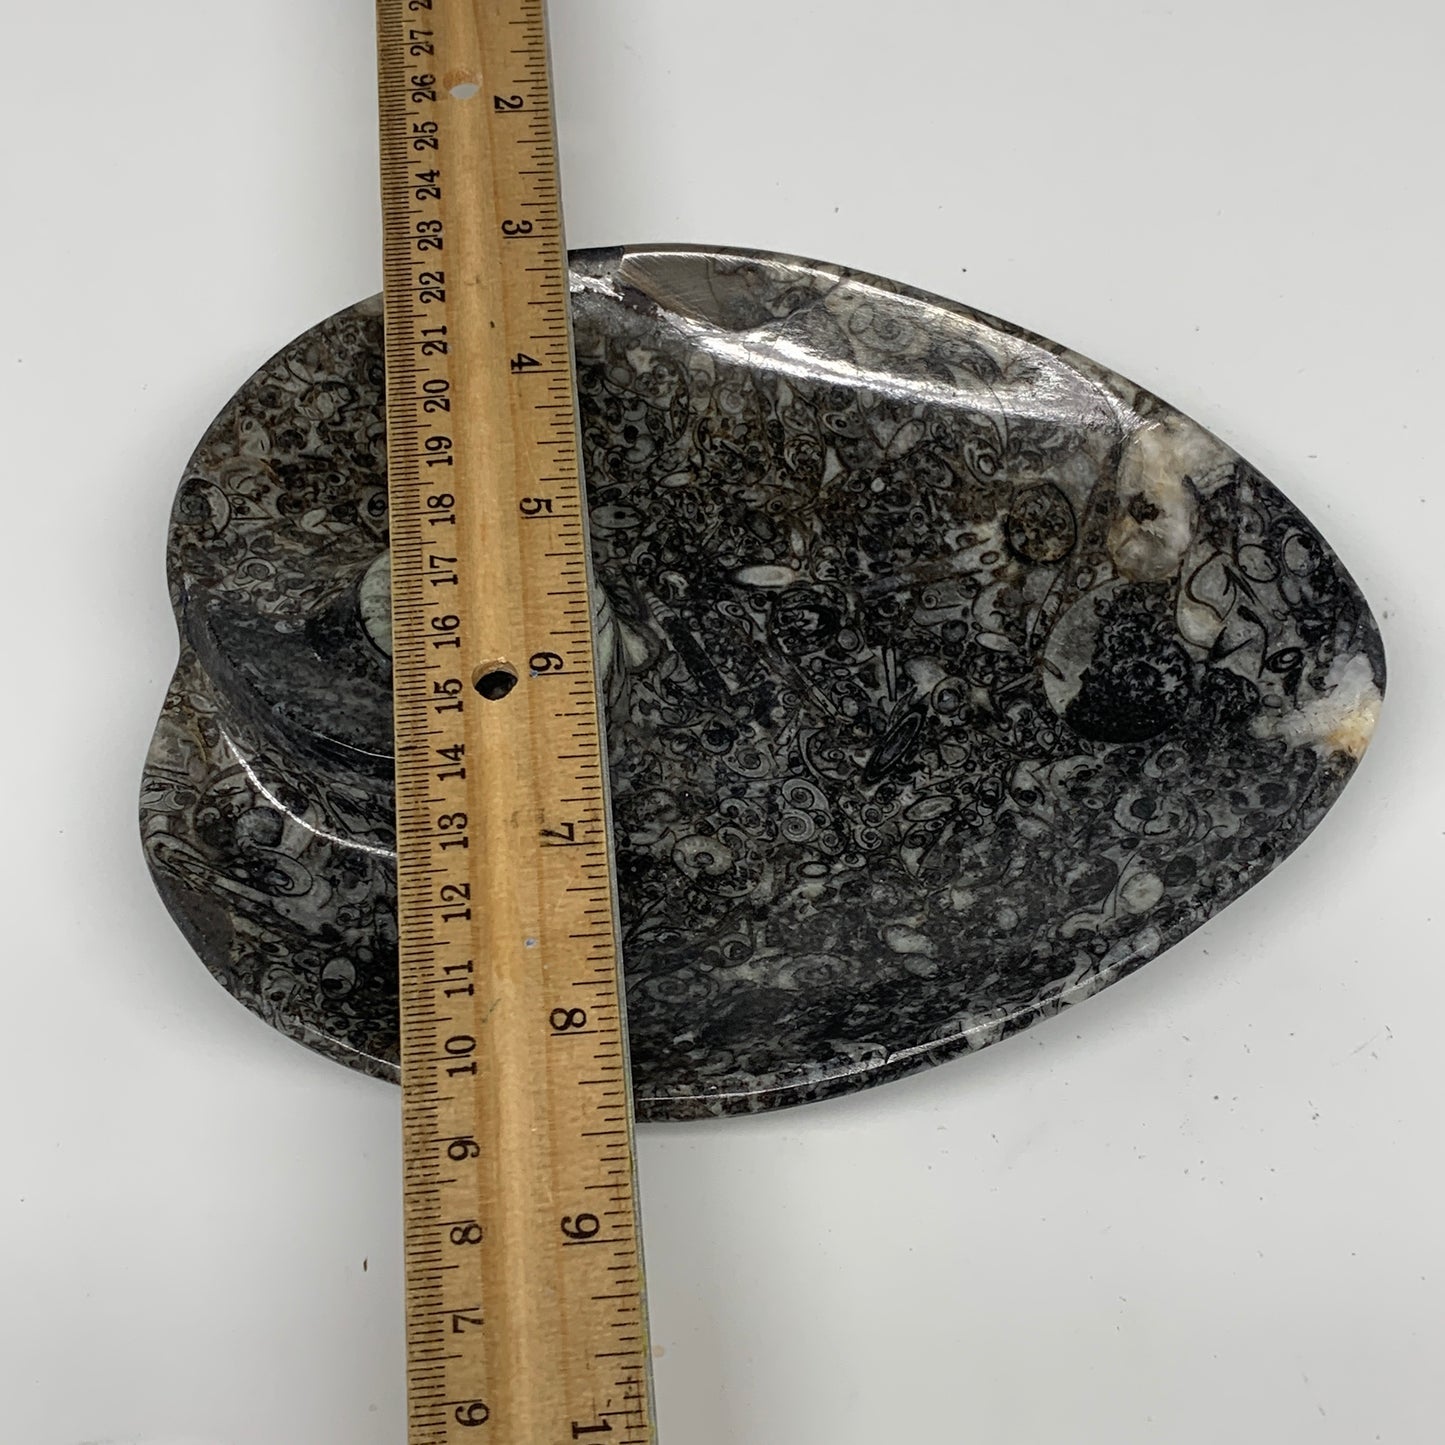 2pcs Set, 6.25"x5.25" Heart Fossils Orthoceras Ammonite Bowls @Morocco, B8485